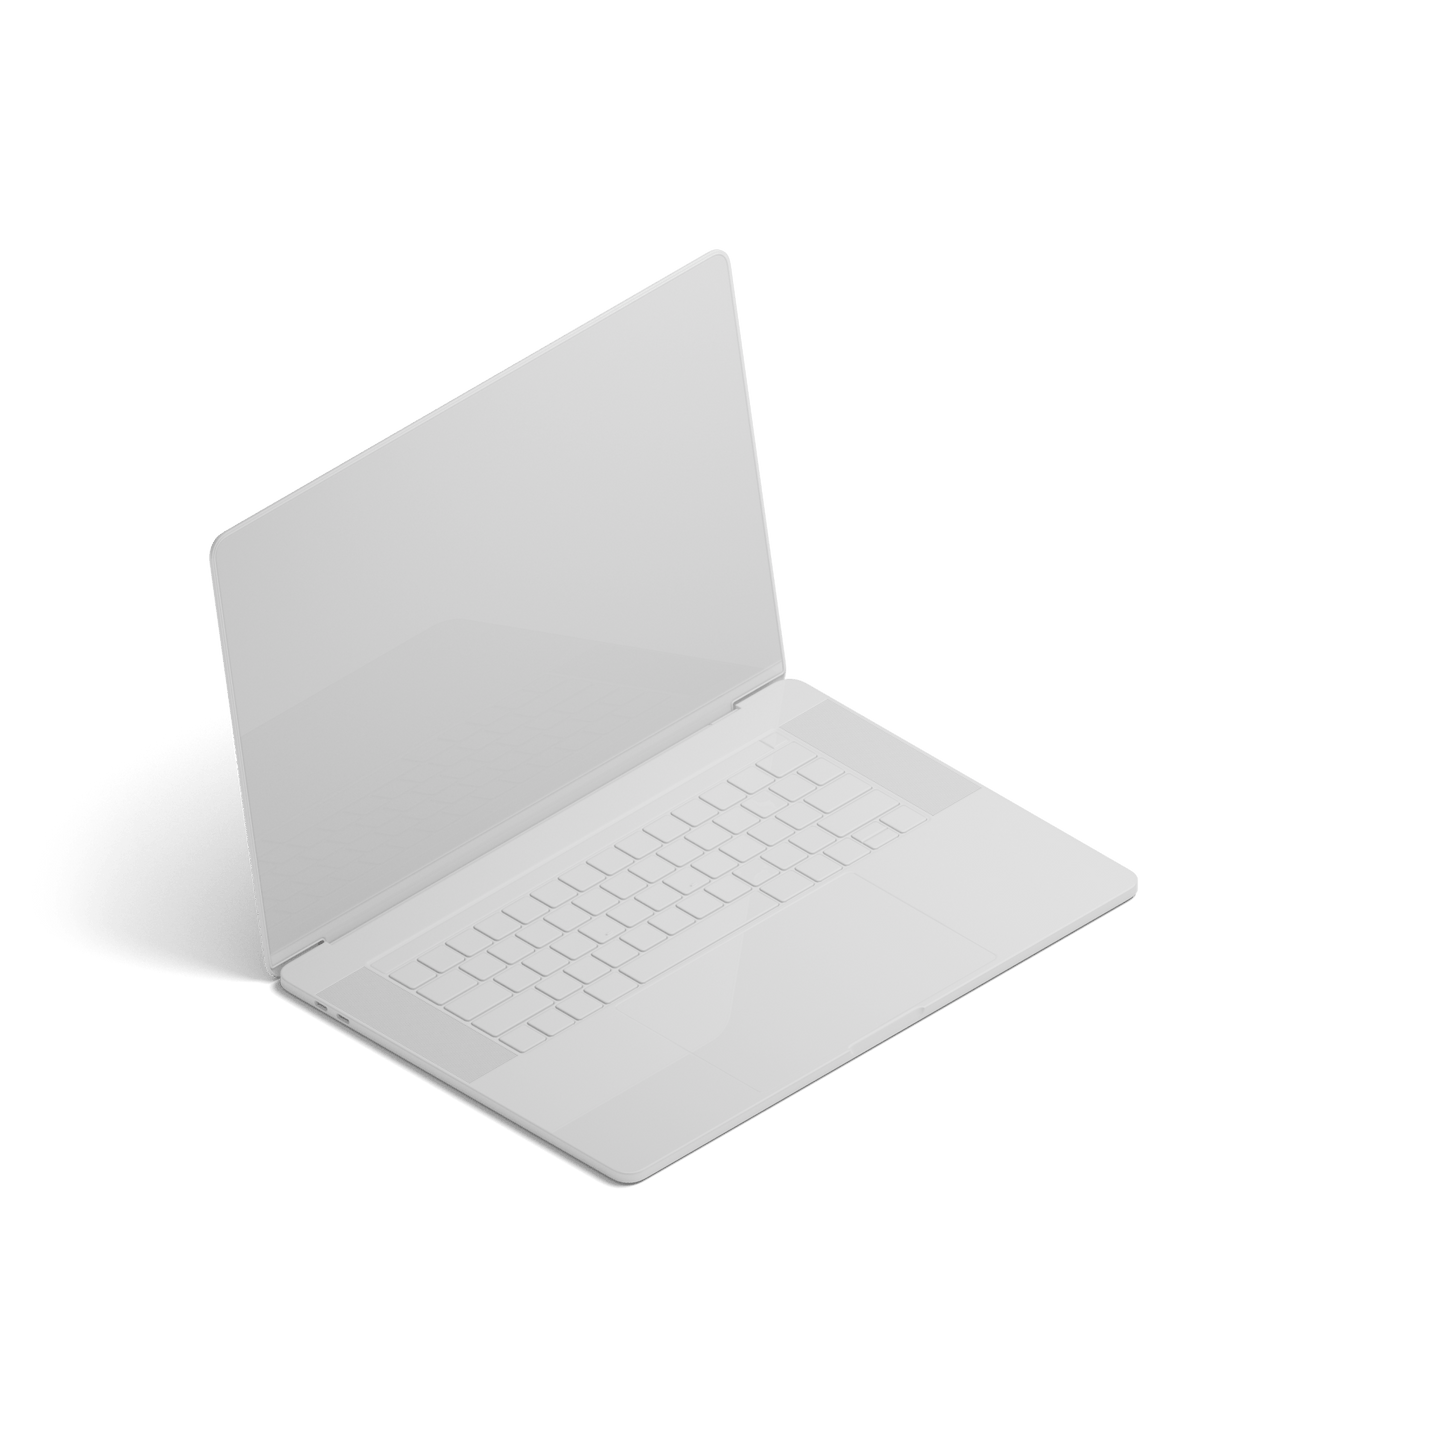 Laptop 4 - TCA Ninja